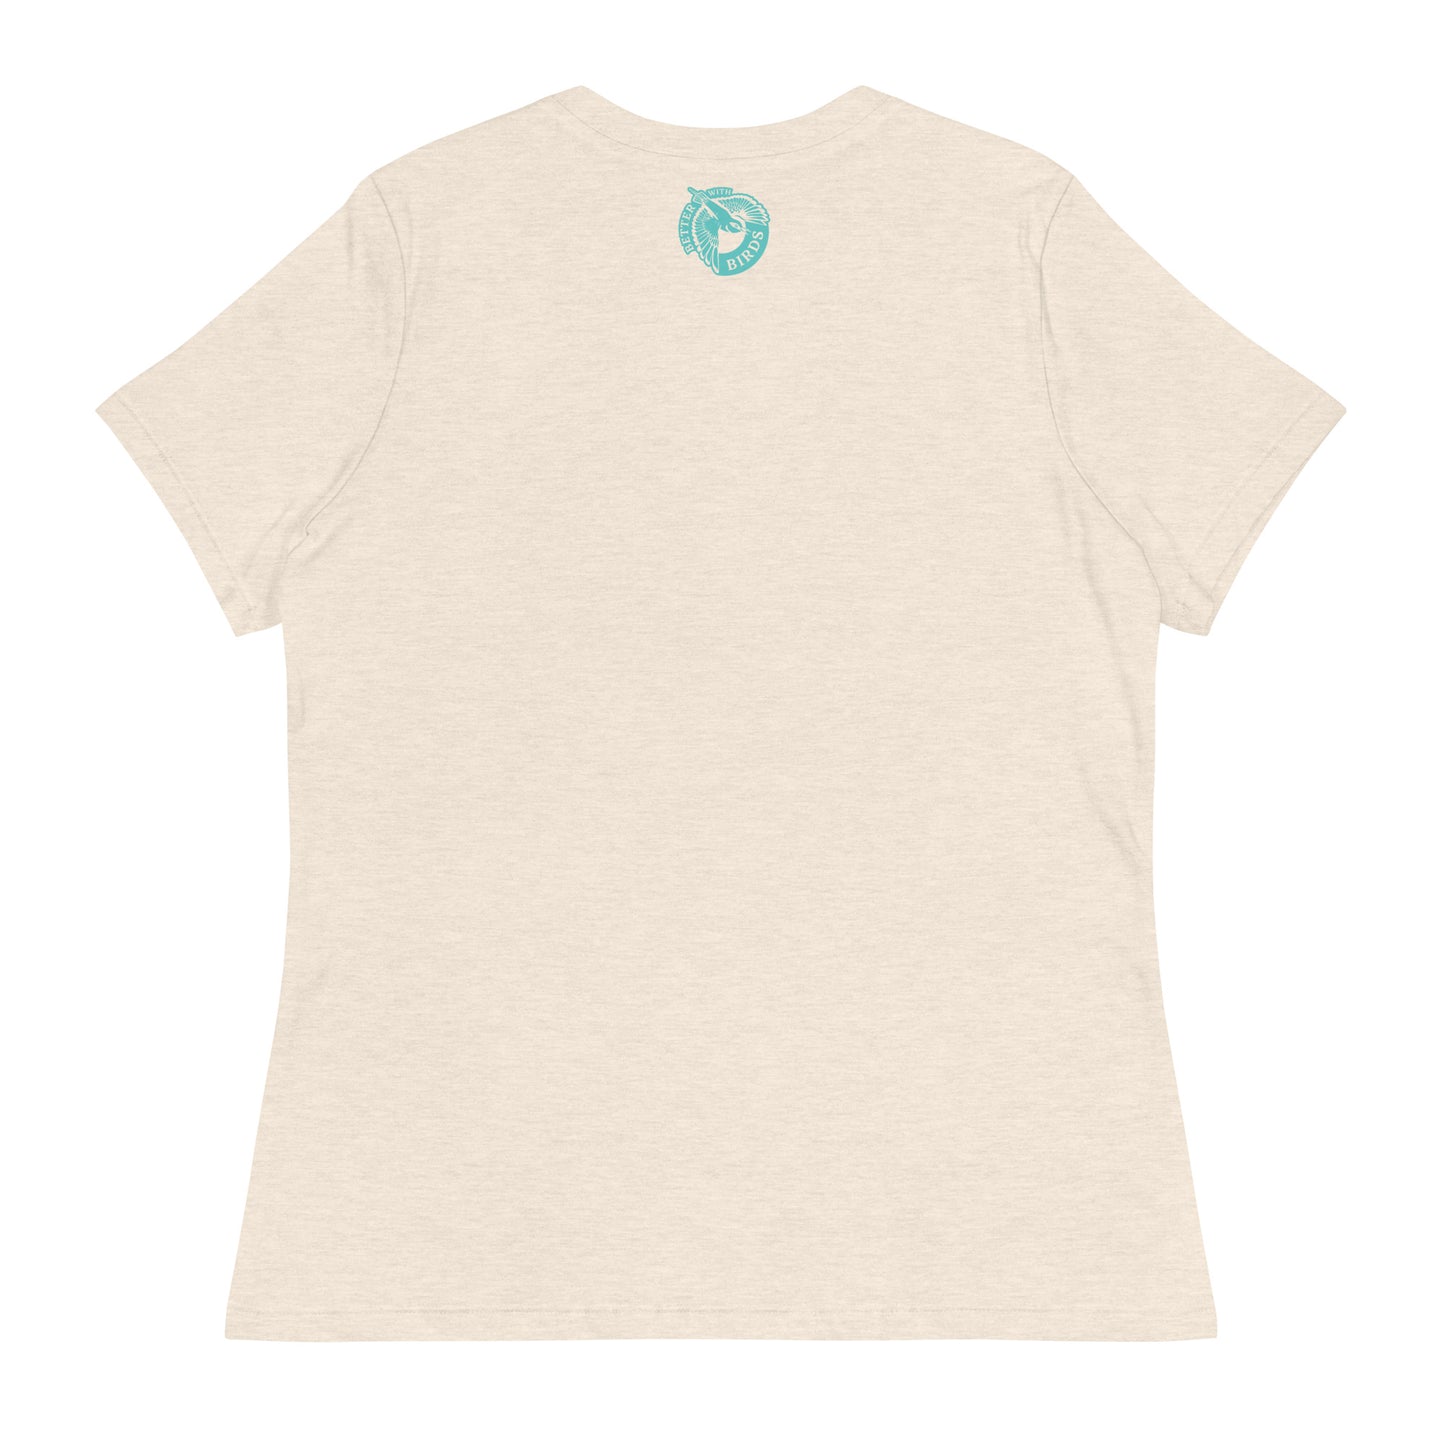 California Quail Women's Relaxed T-Shirt